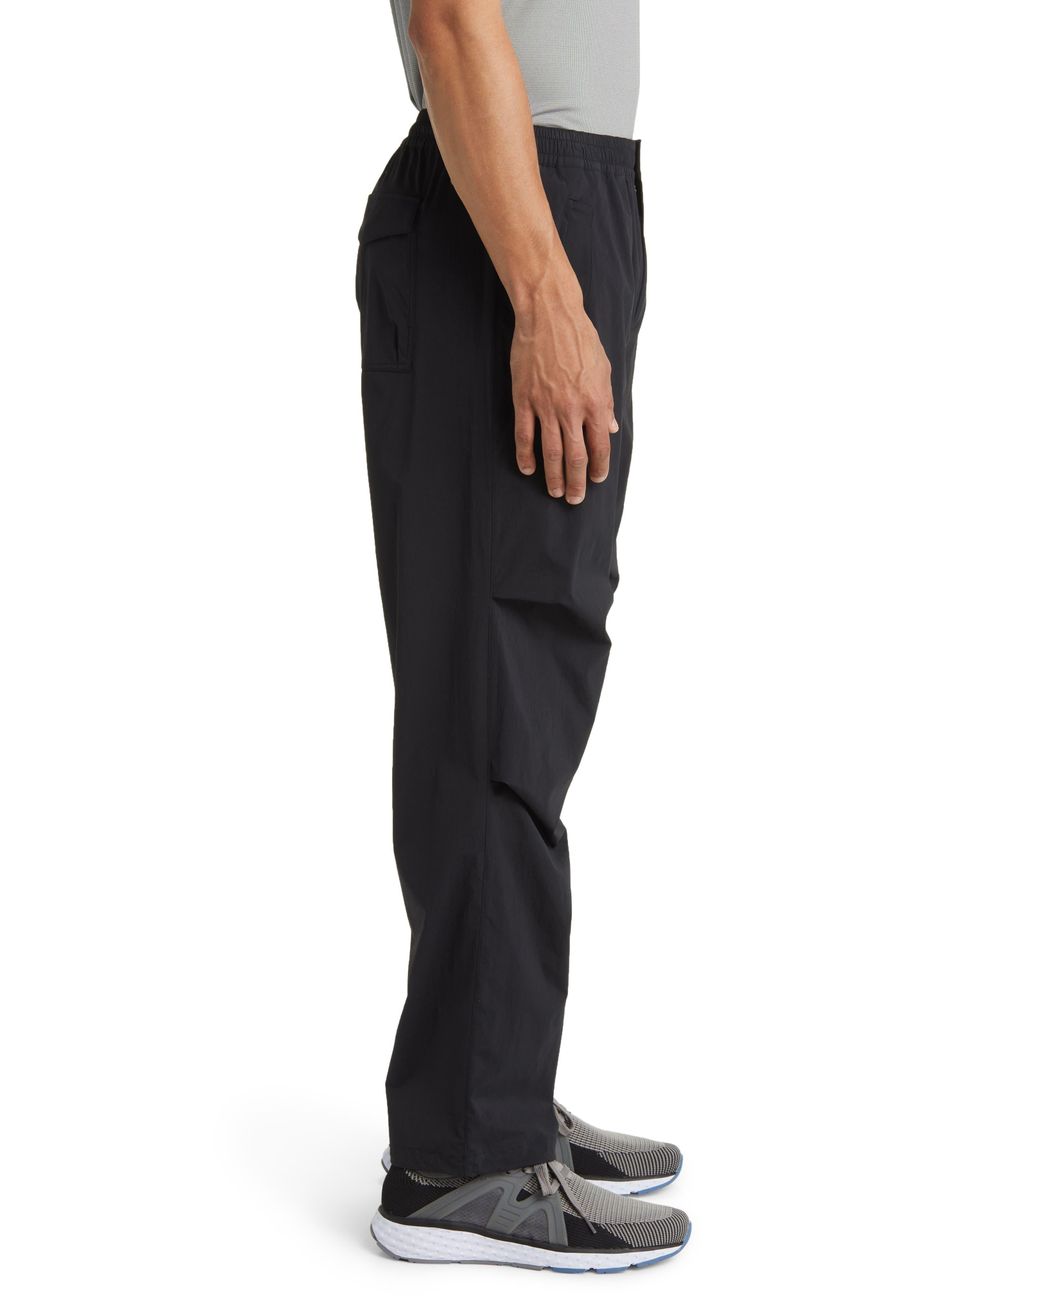 Zella Rush Water Resistant Stretch Nylon Pants in Black for Men